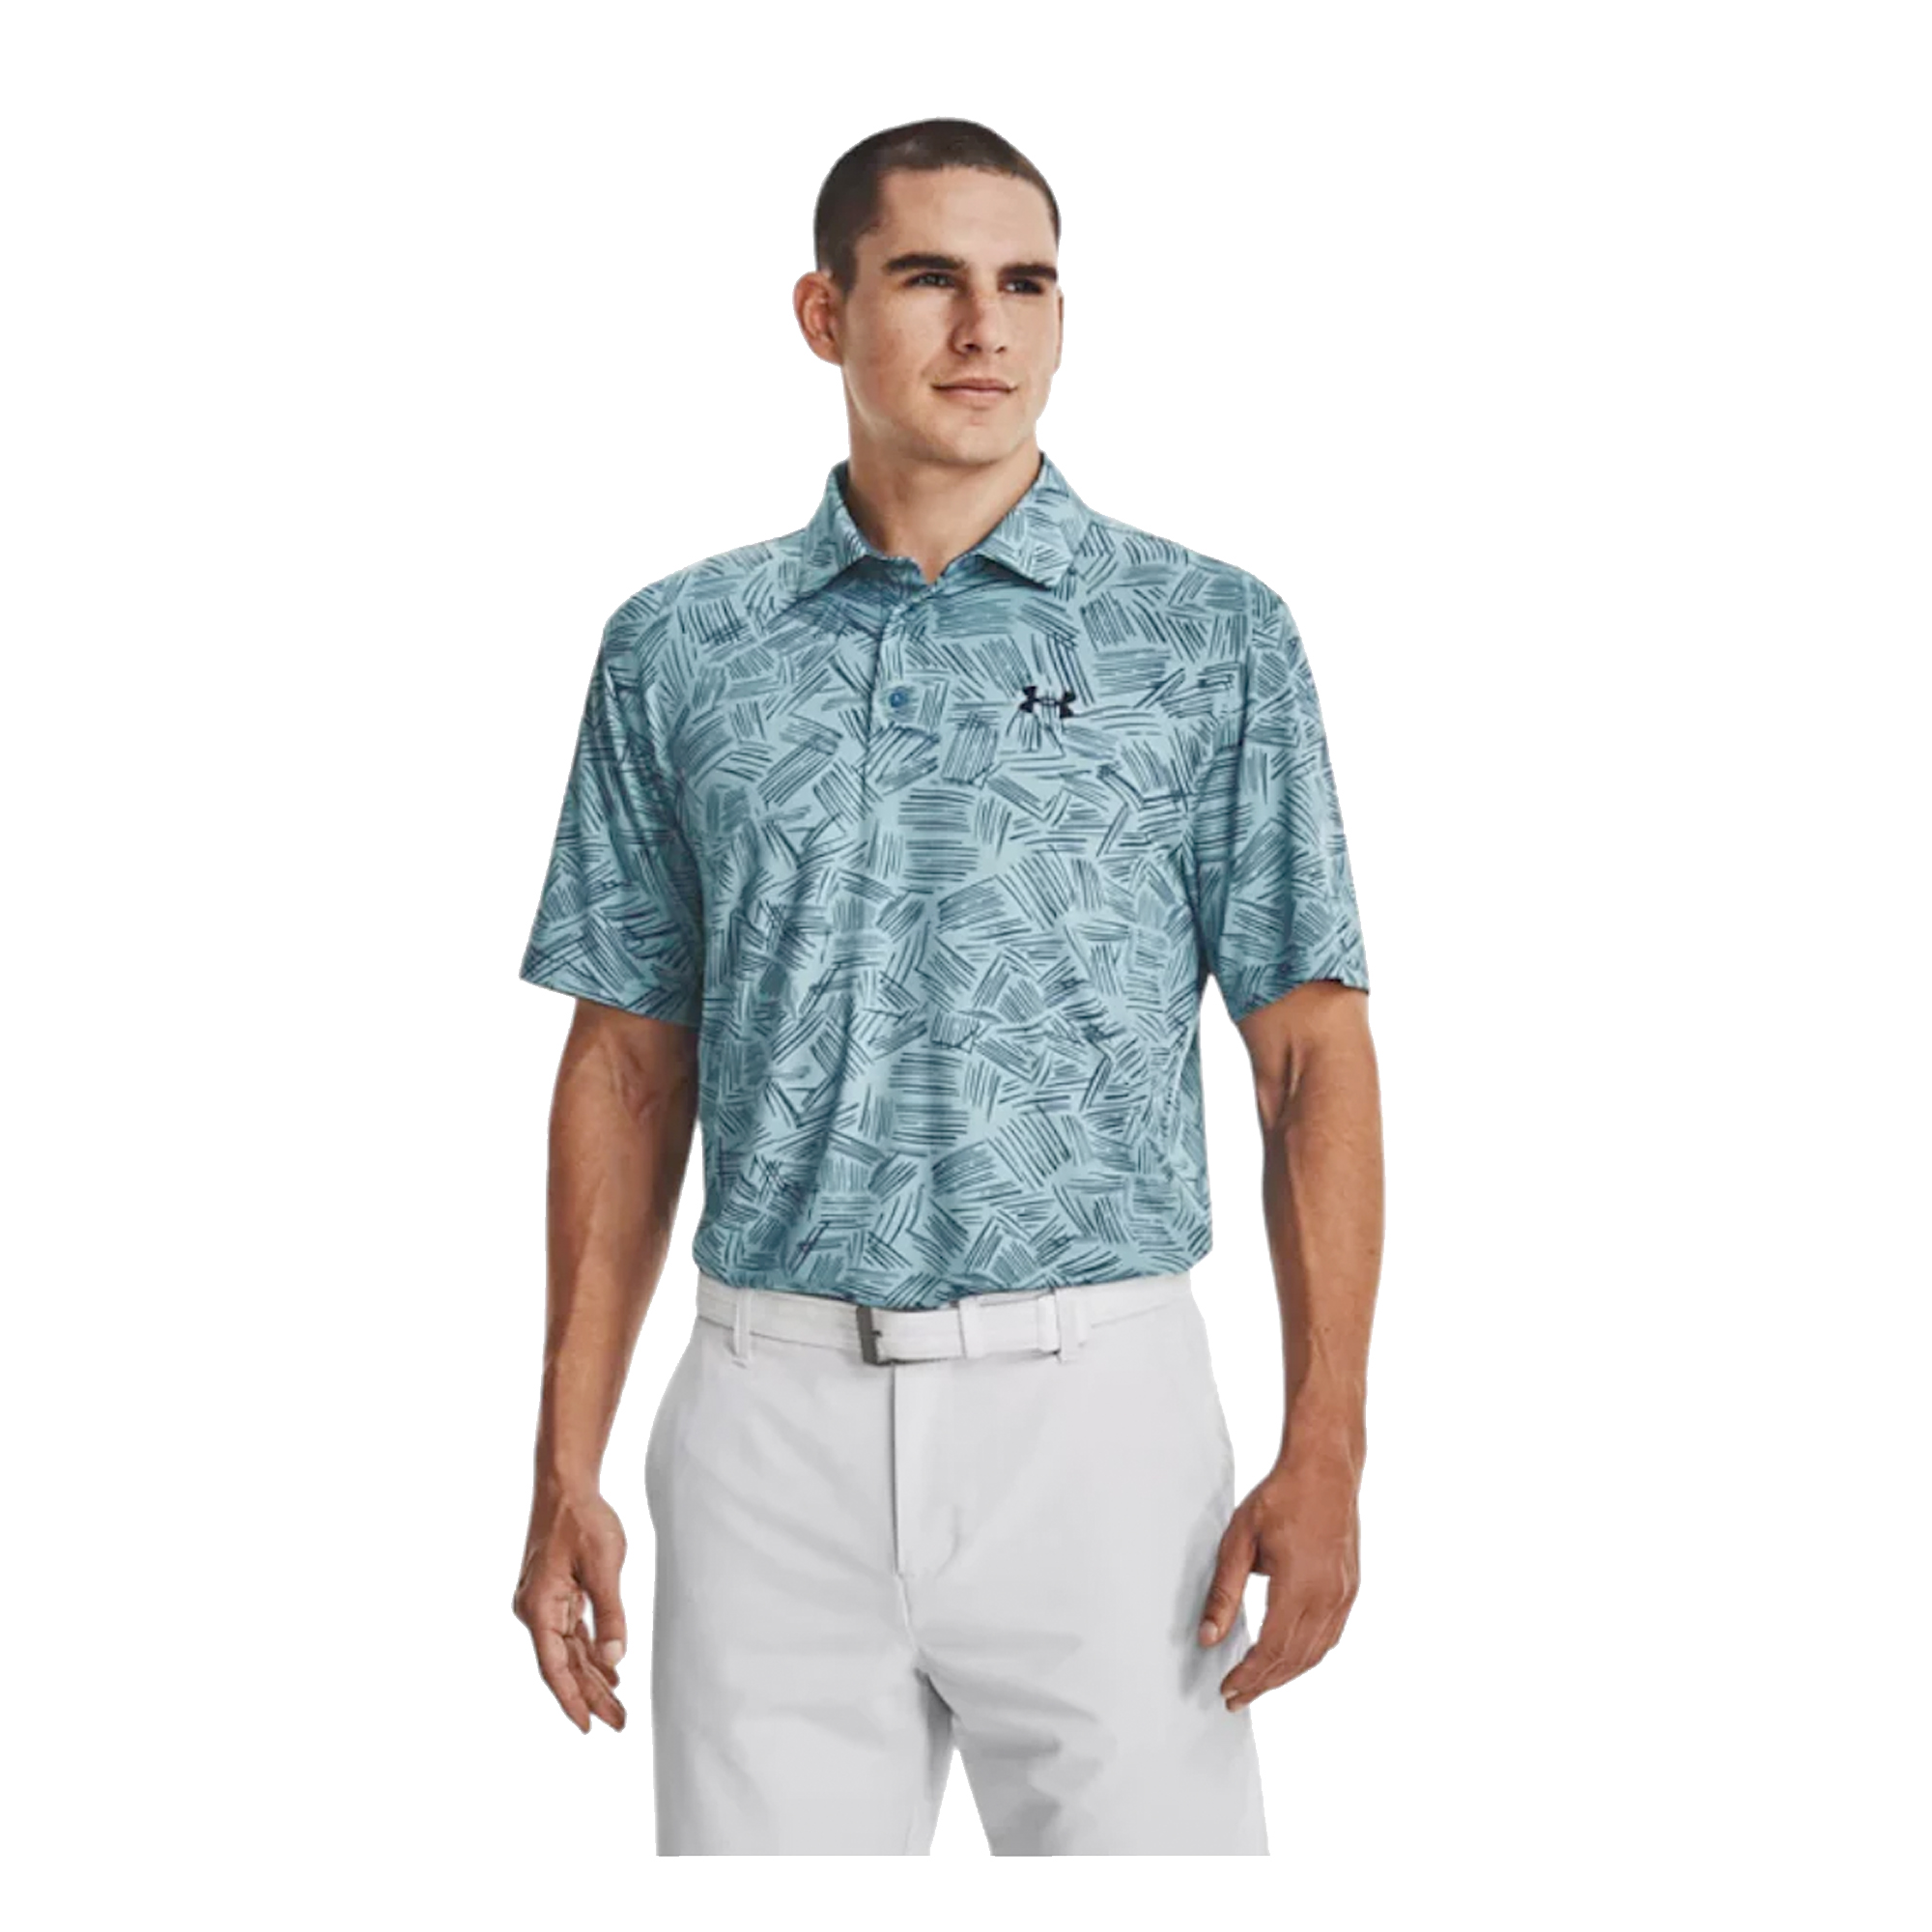 Under Armour Mens Playoff 3.0 Printed Golf Polo Shirt 